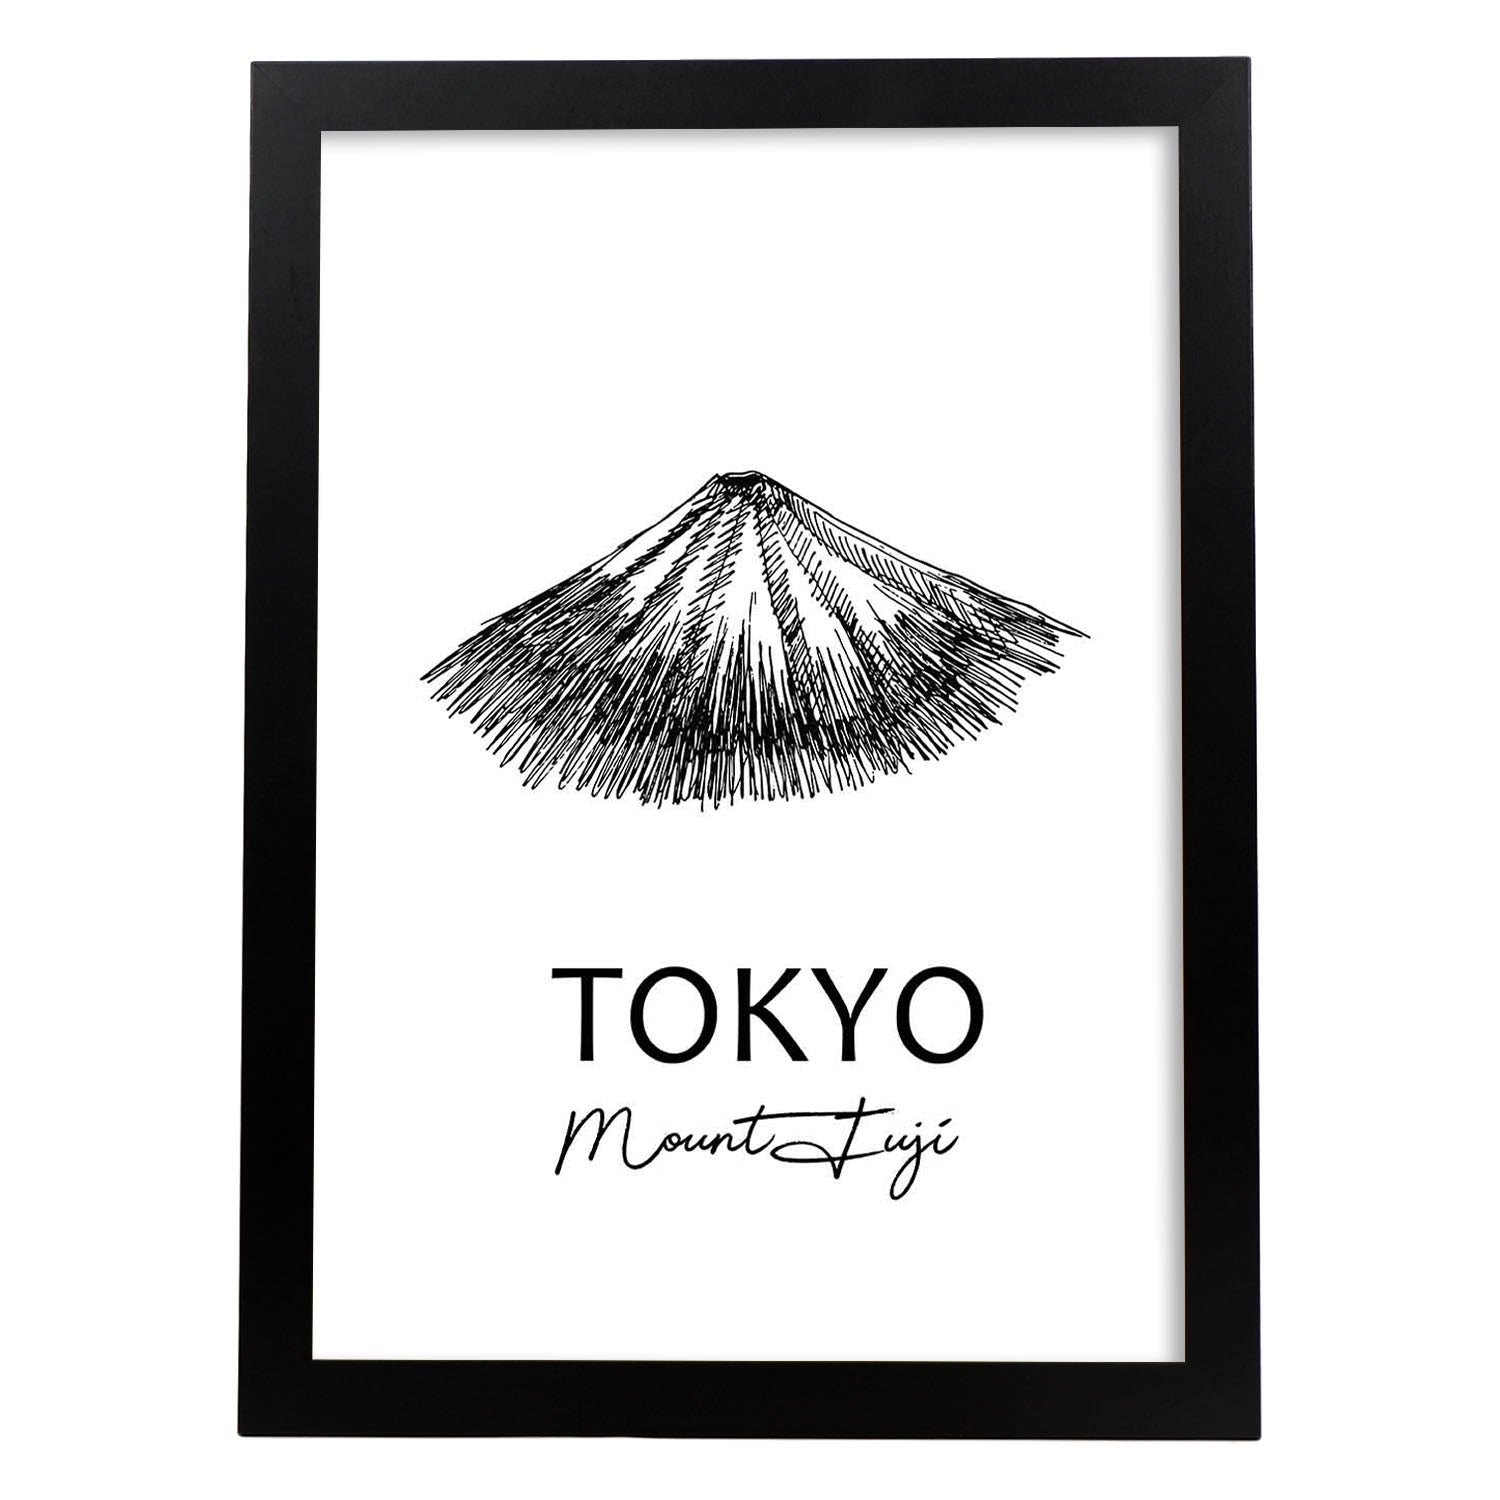 Poster de Tokyo - Monte Fuji. Láminas con monumentos de ciudades.-Artwork-Nacnic-A4-Marco Negro-Nacnic Estudio SL